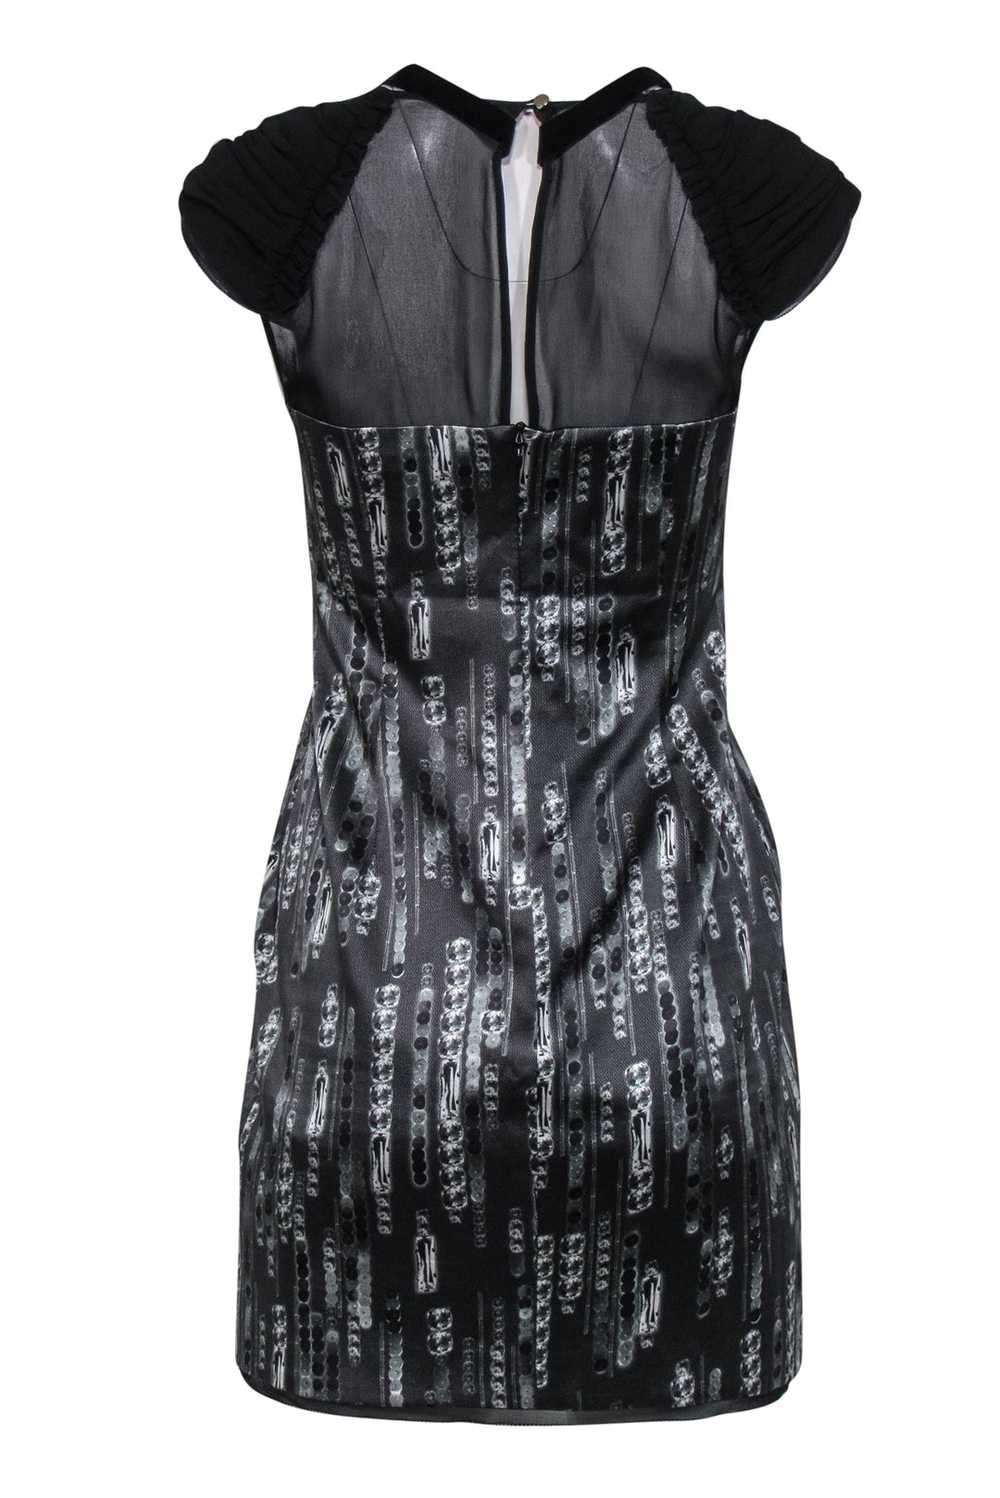 Karen Millen - Black Diamond Print Sheath Dress w… - image 3